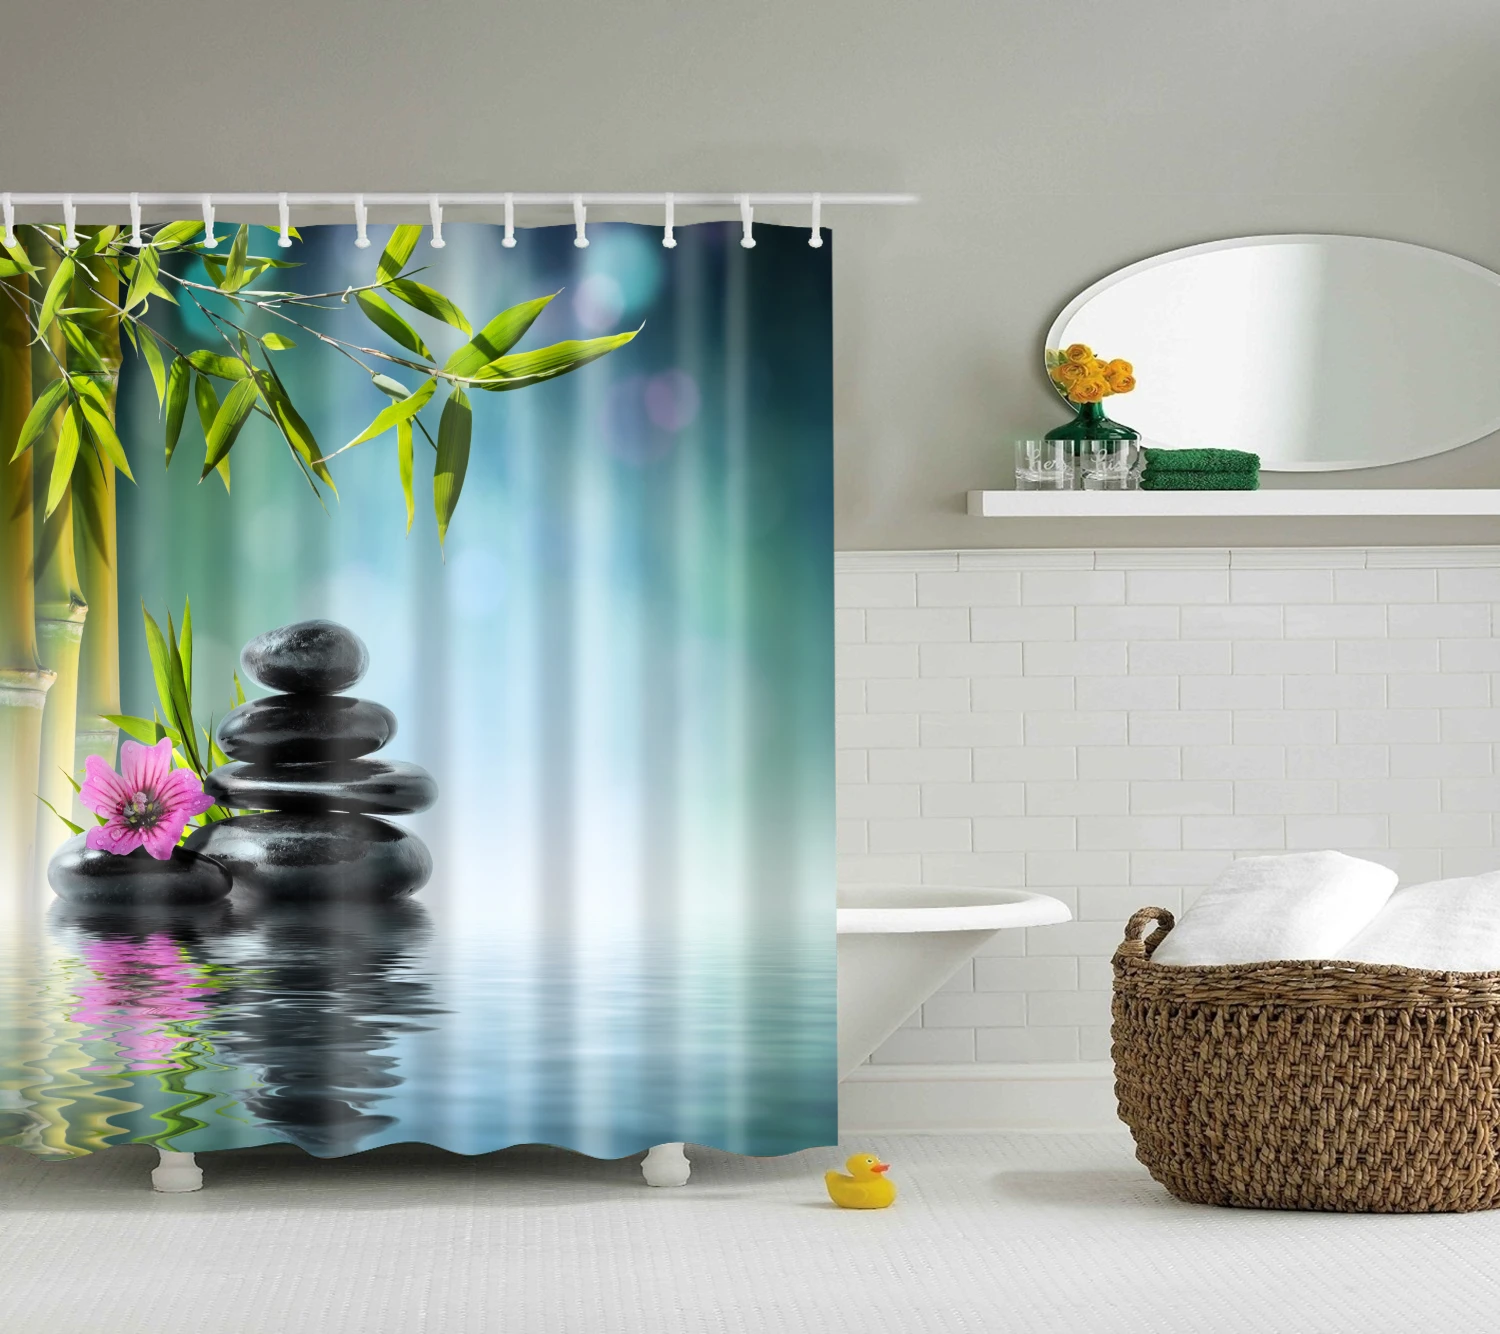 Wood Bamboo Background Waterproof Fabric Shower Curtain Bathroom Set & Hooks 